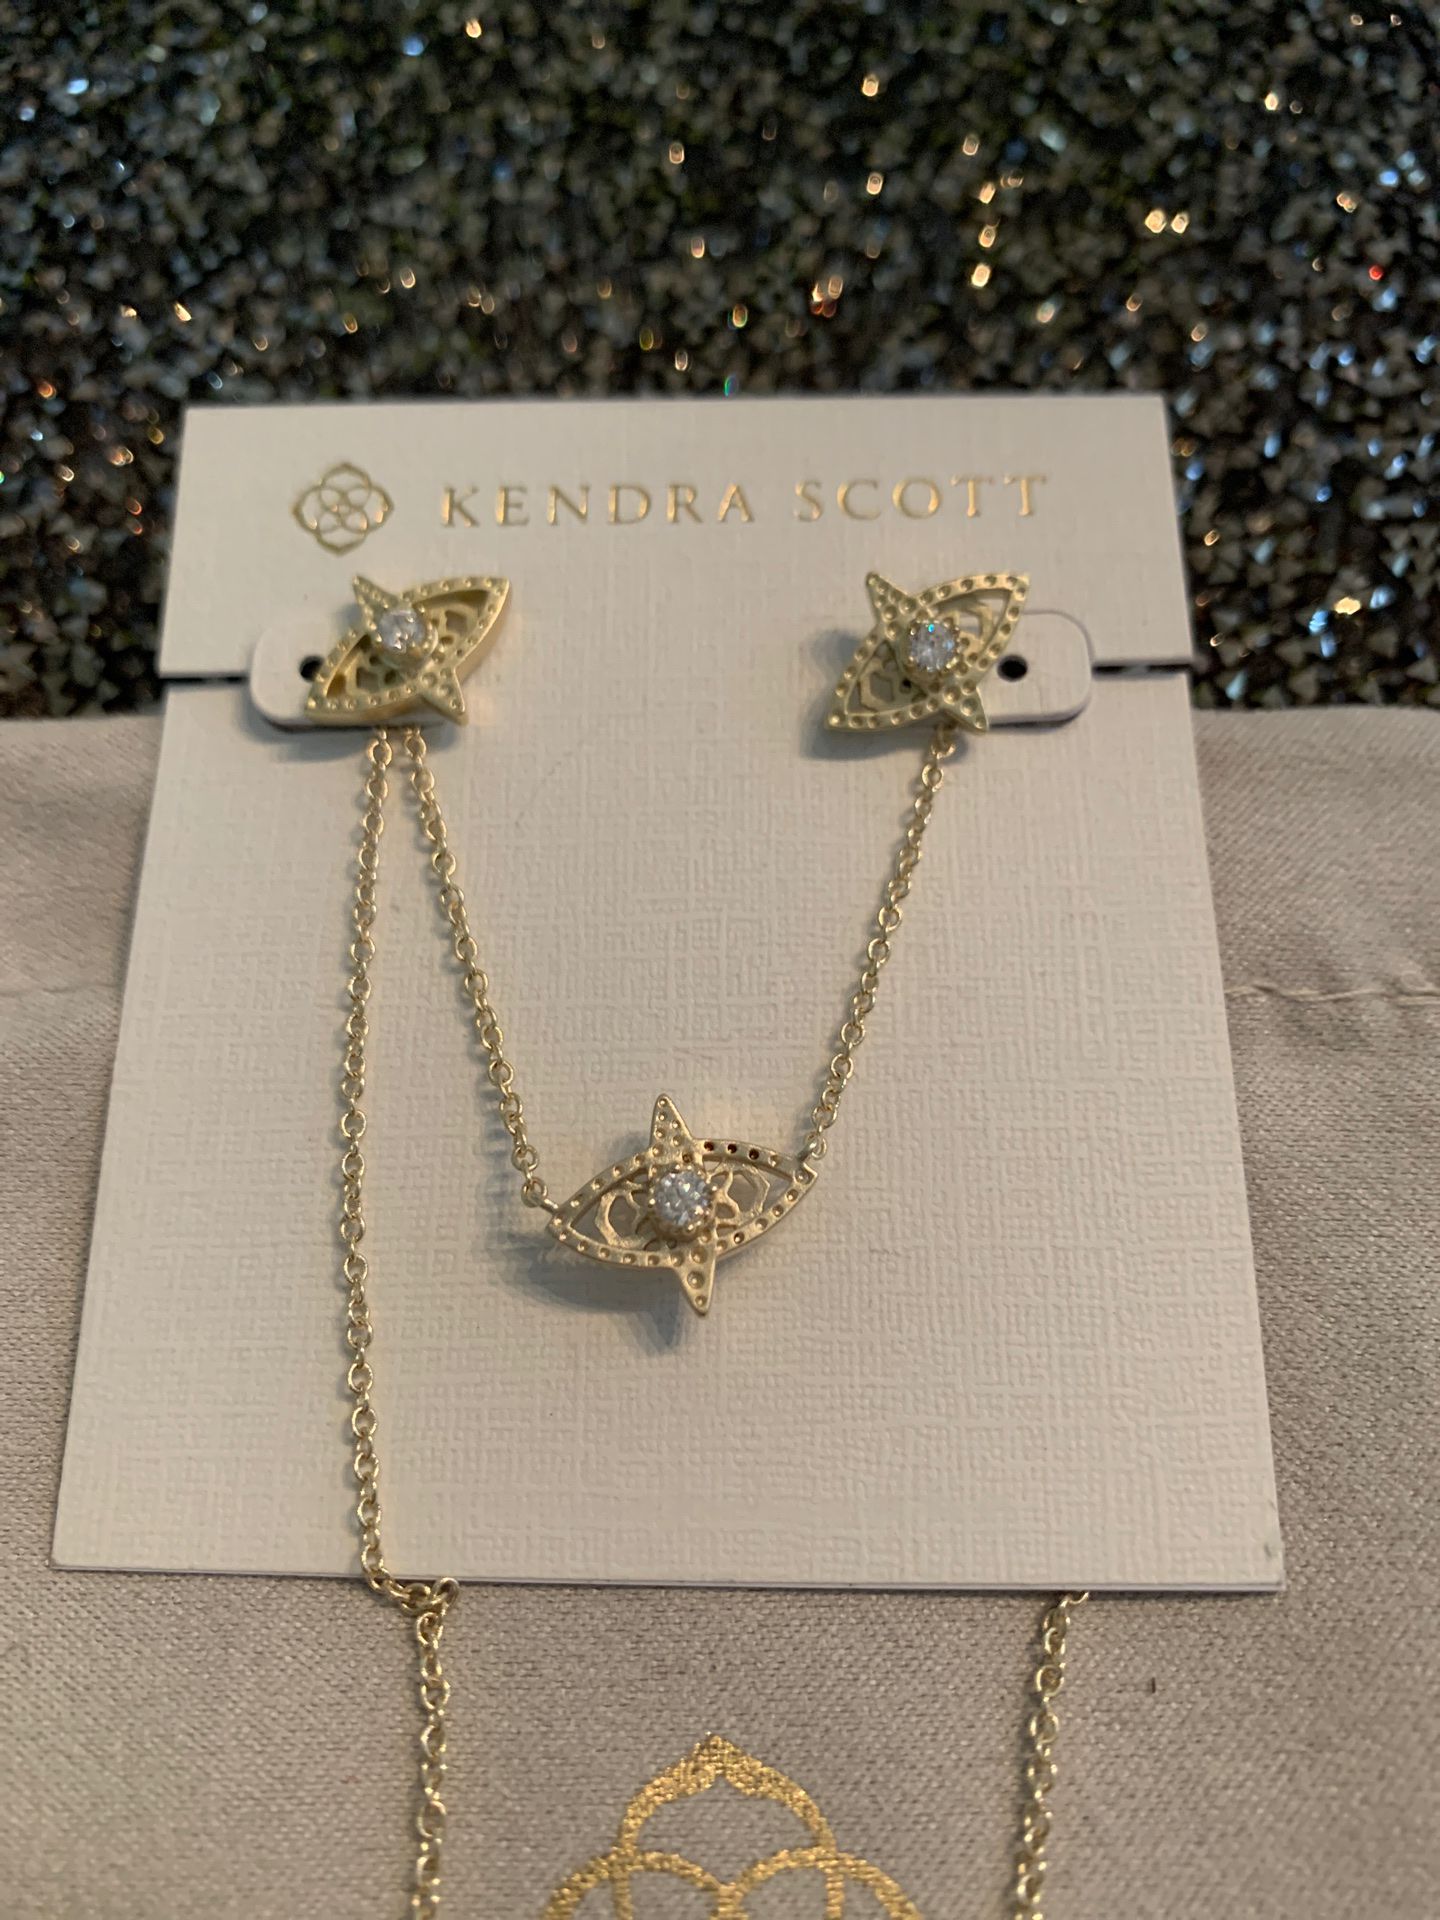 Kendra Scott Caleb earrings +necklace, NEW